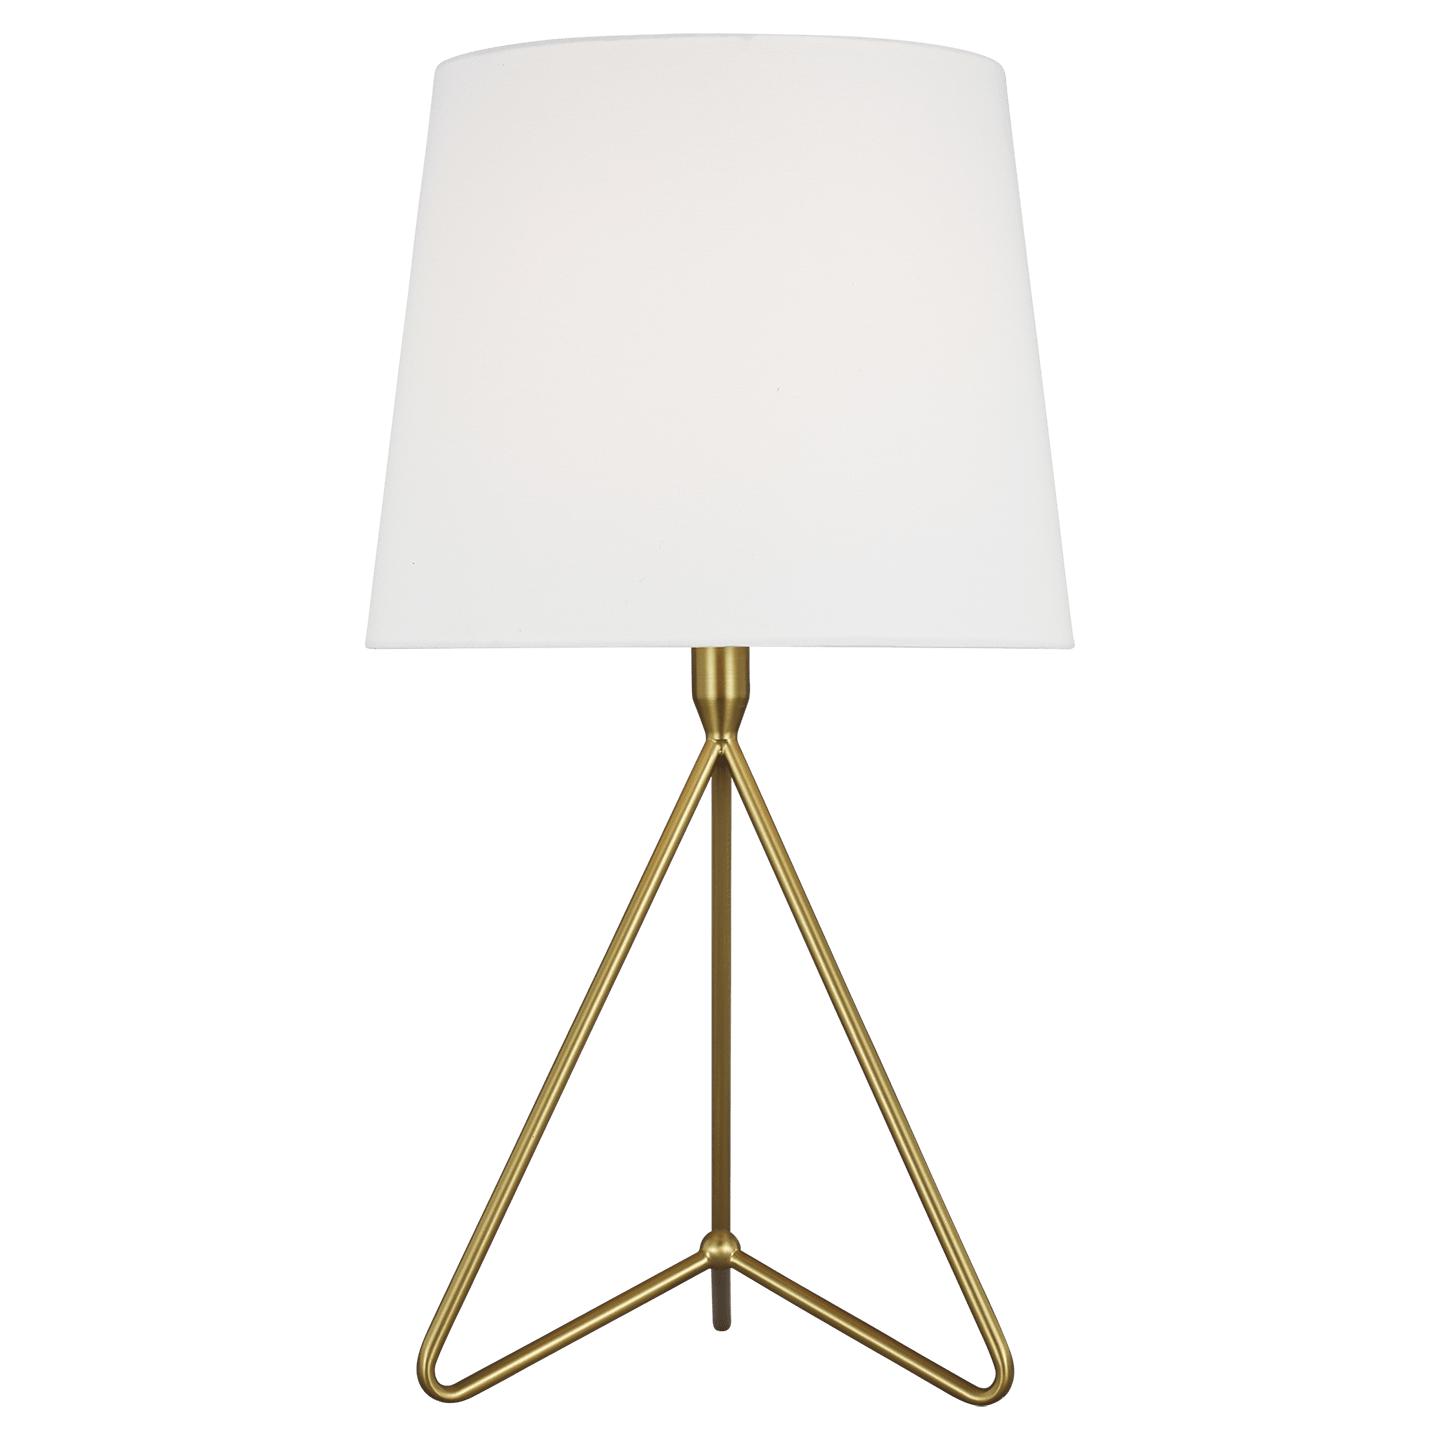 Купить Настольная лампа Dylan Tall Table Lamp в интернет-магазине roooms.ru